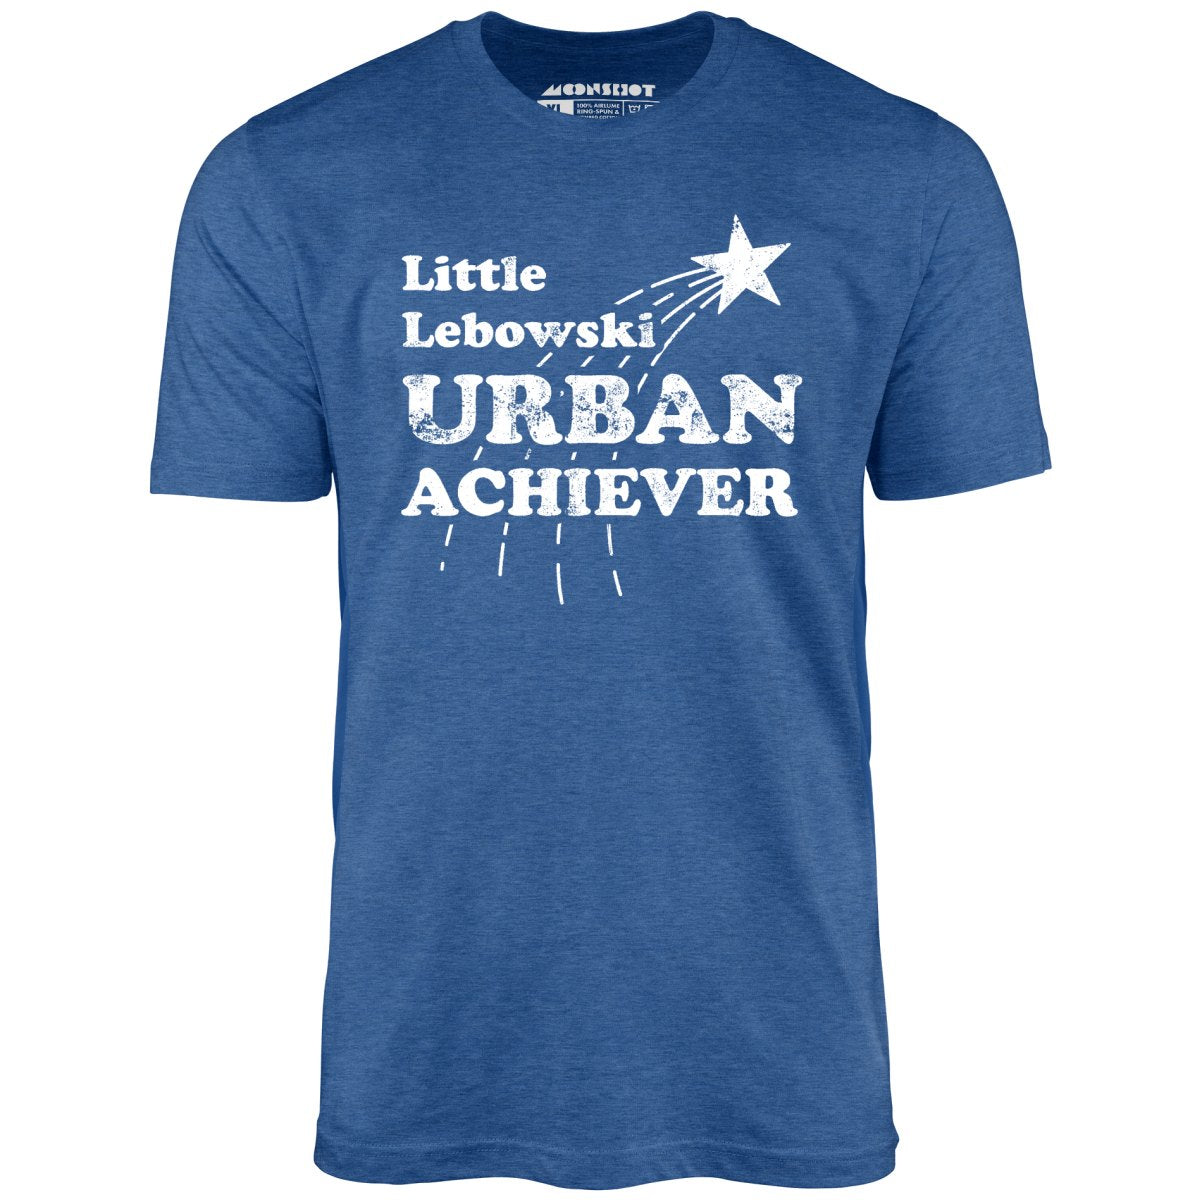 Little Lebowski Urban Achiever - Unisex T-Shirt